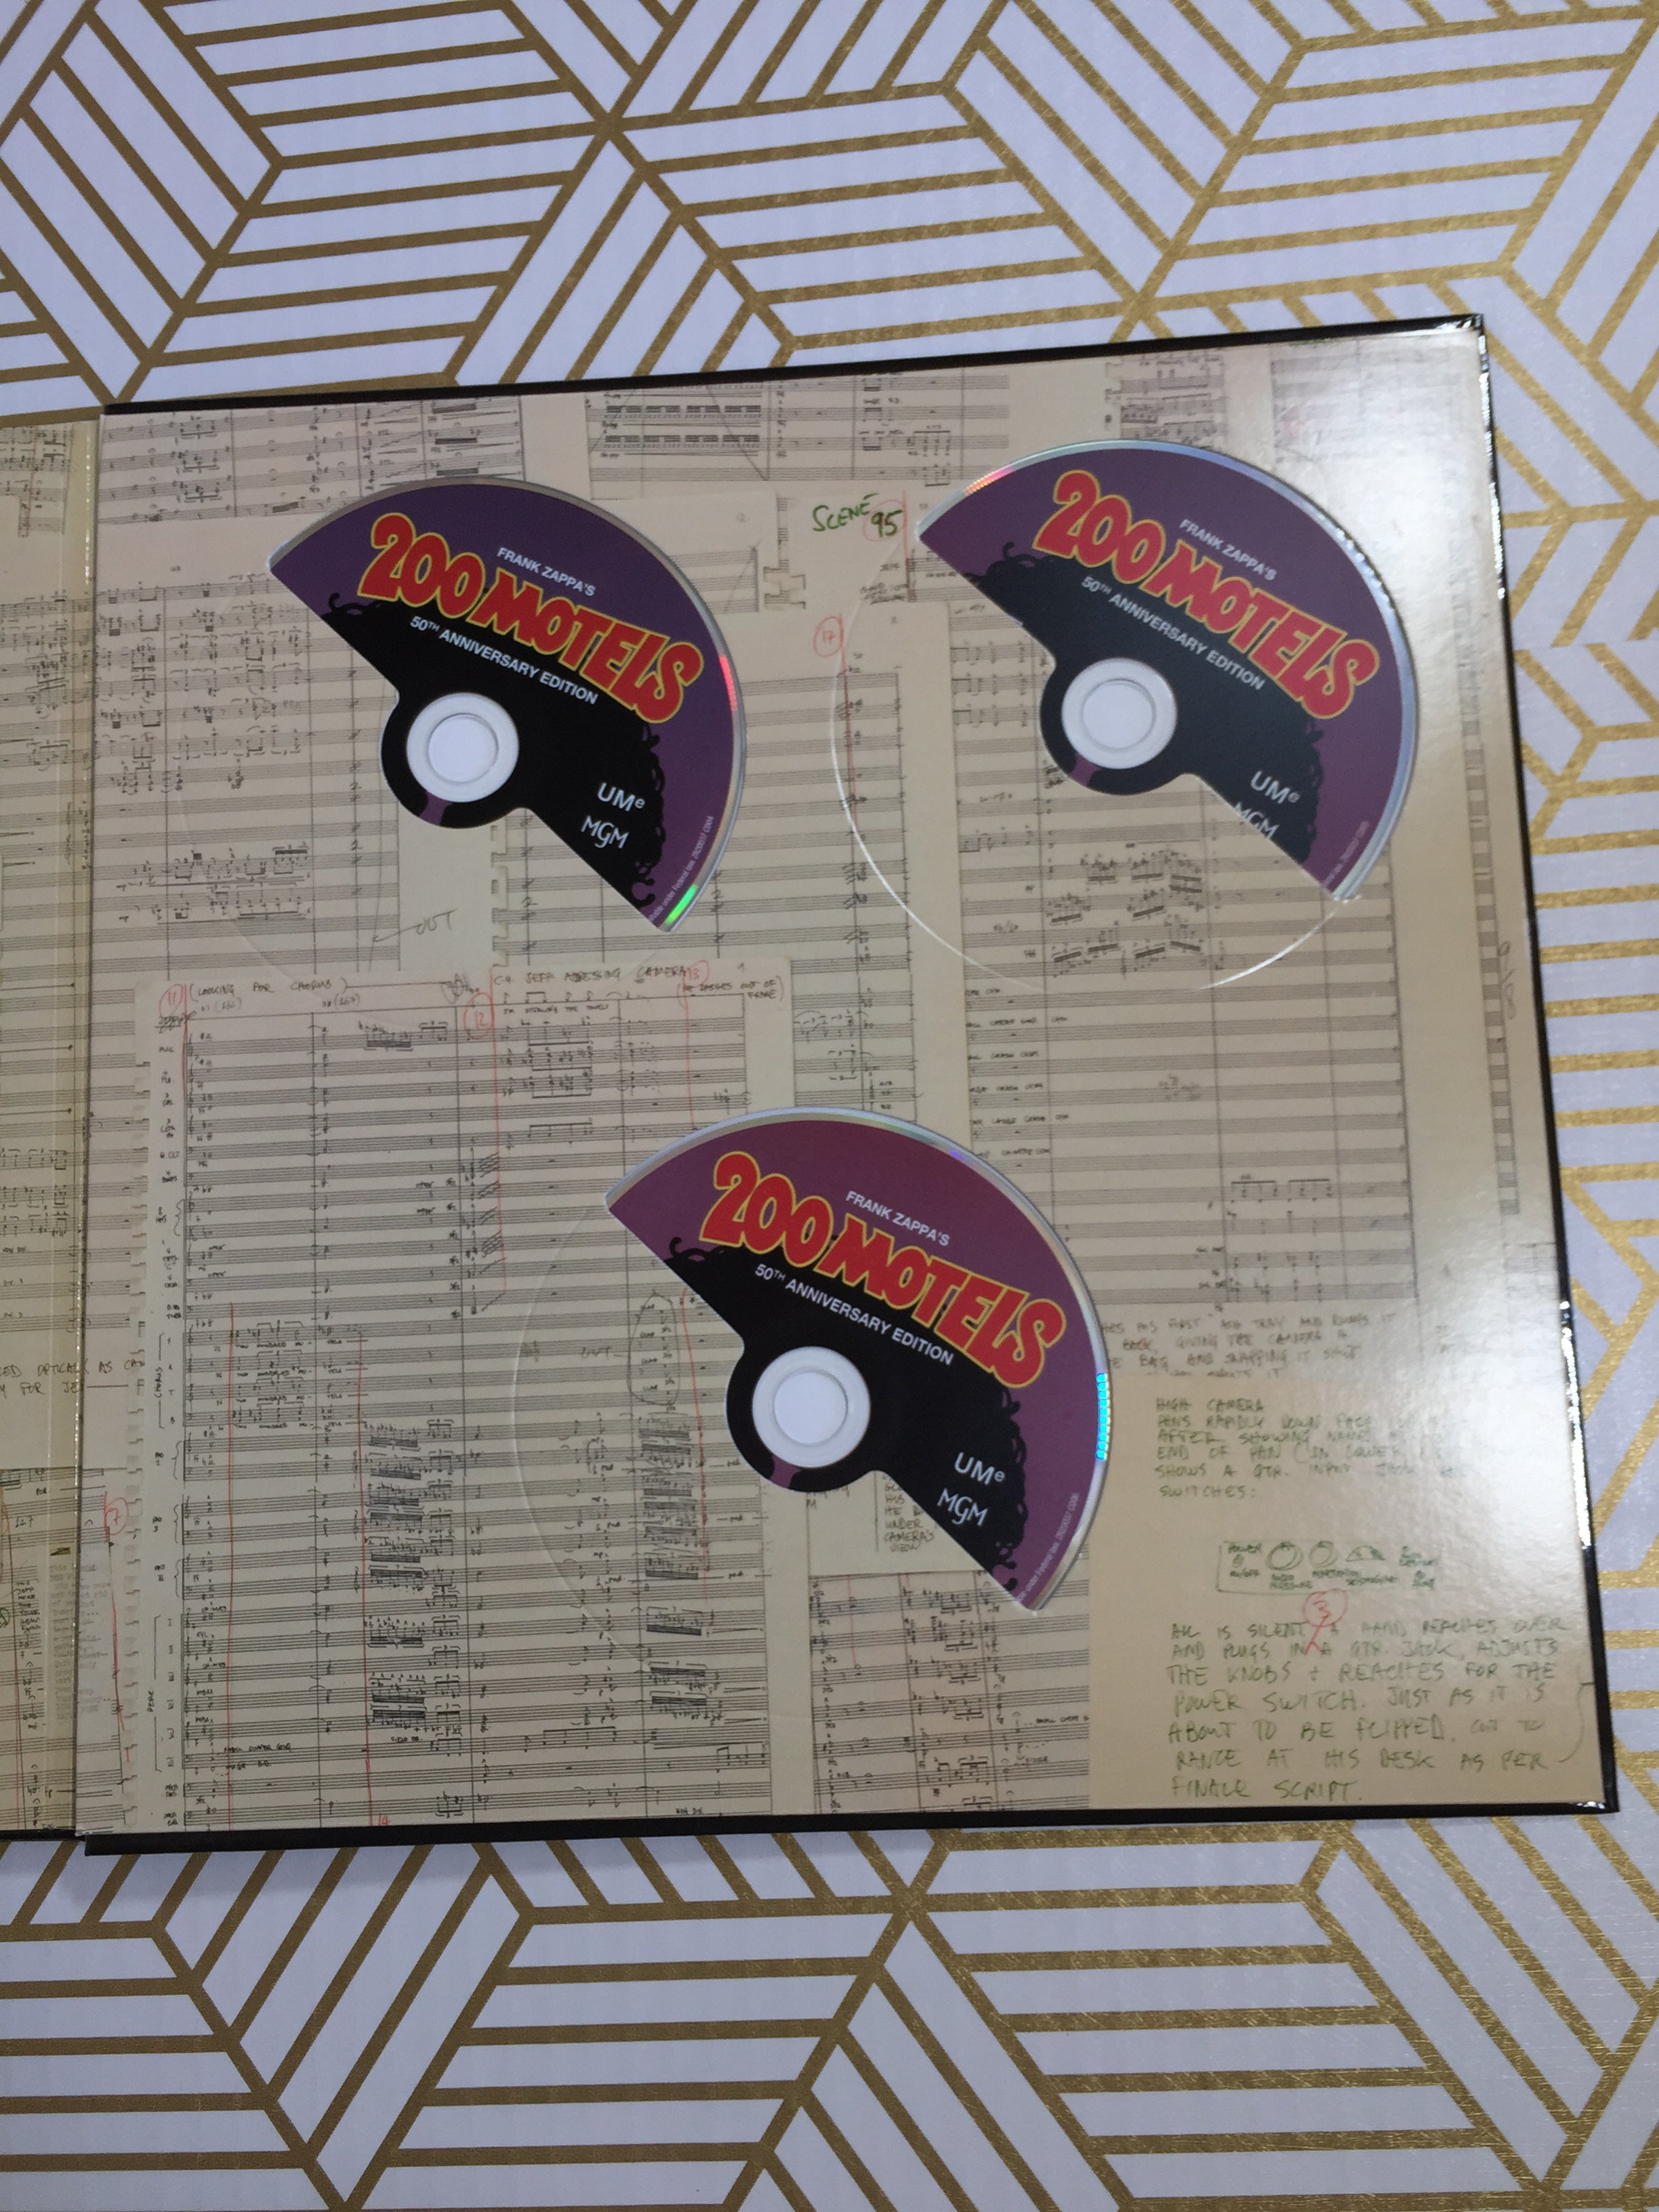 200 Motels Soundtrack 50th Anniversary - Frank Zappa (7667781435630)